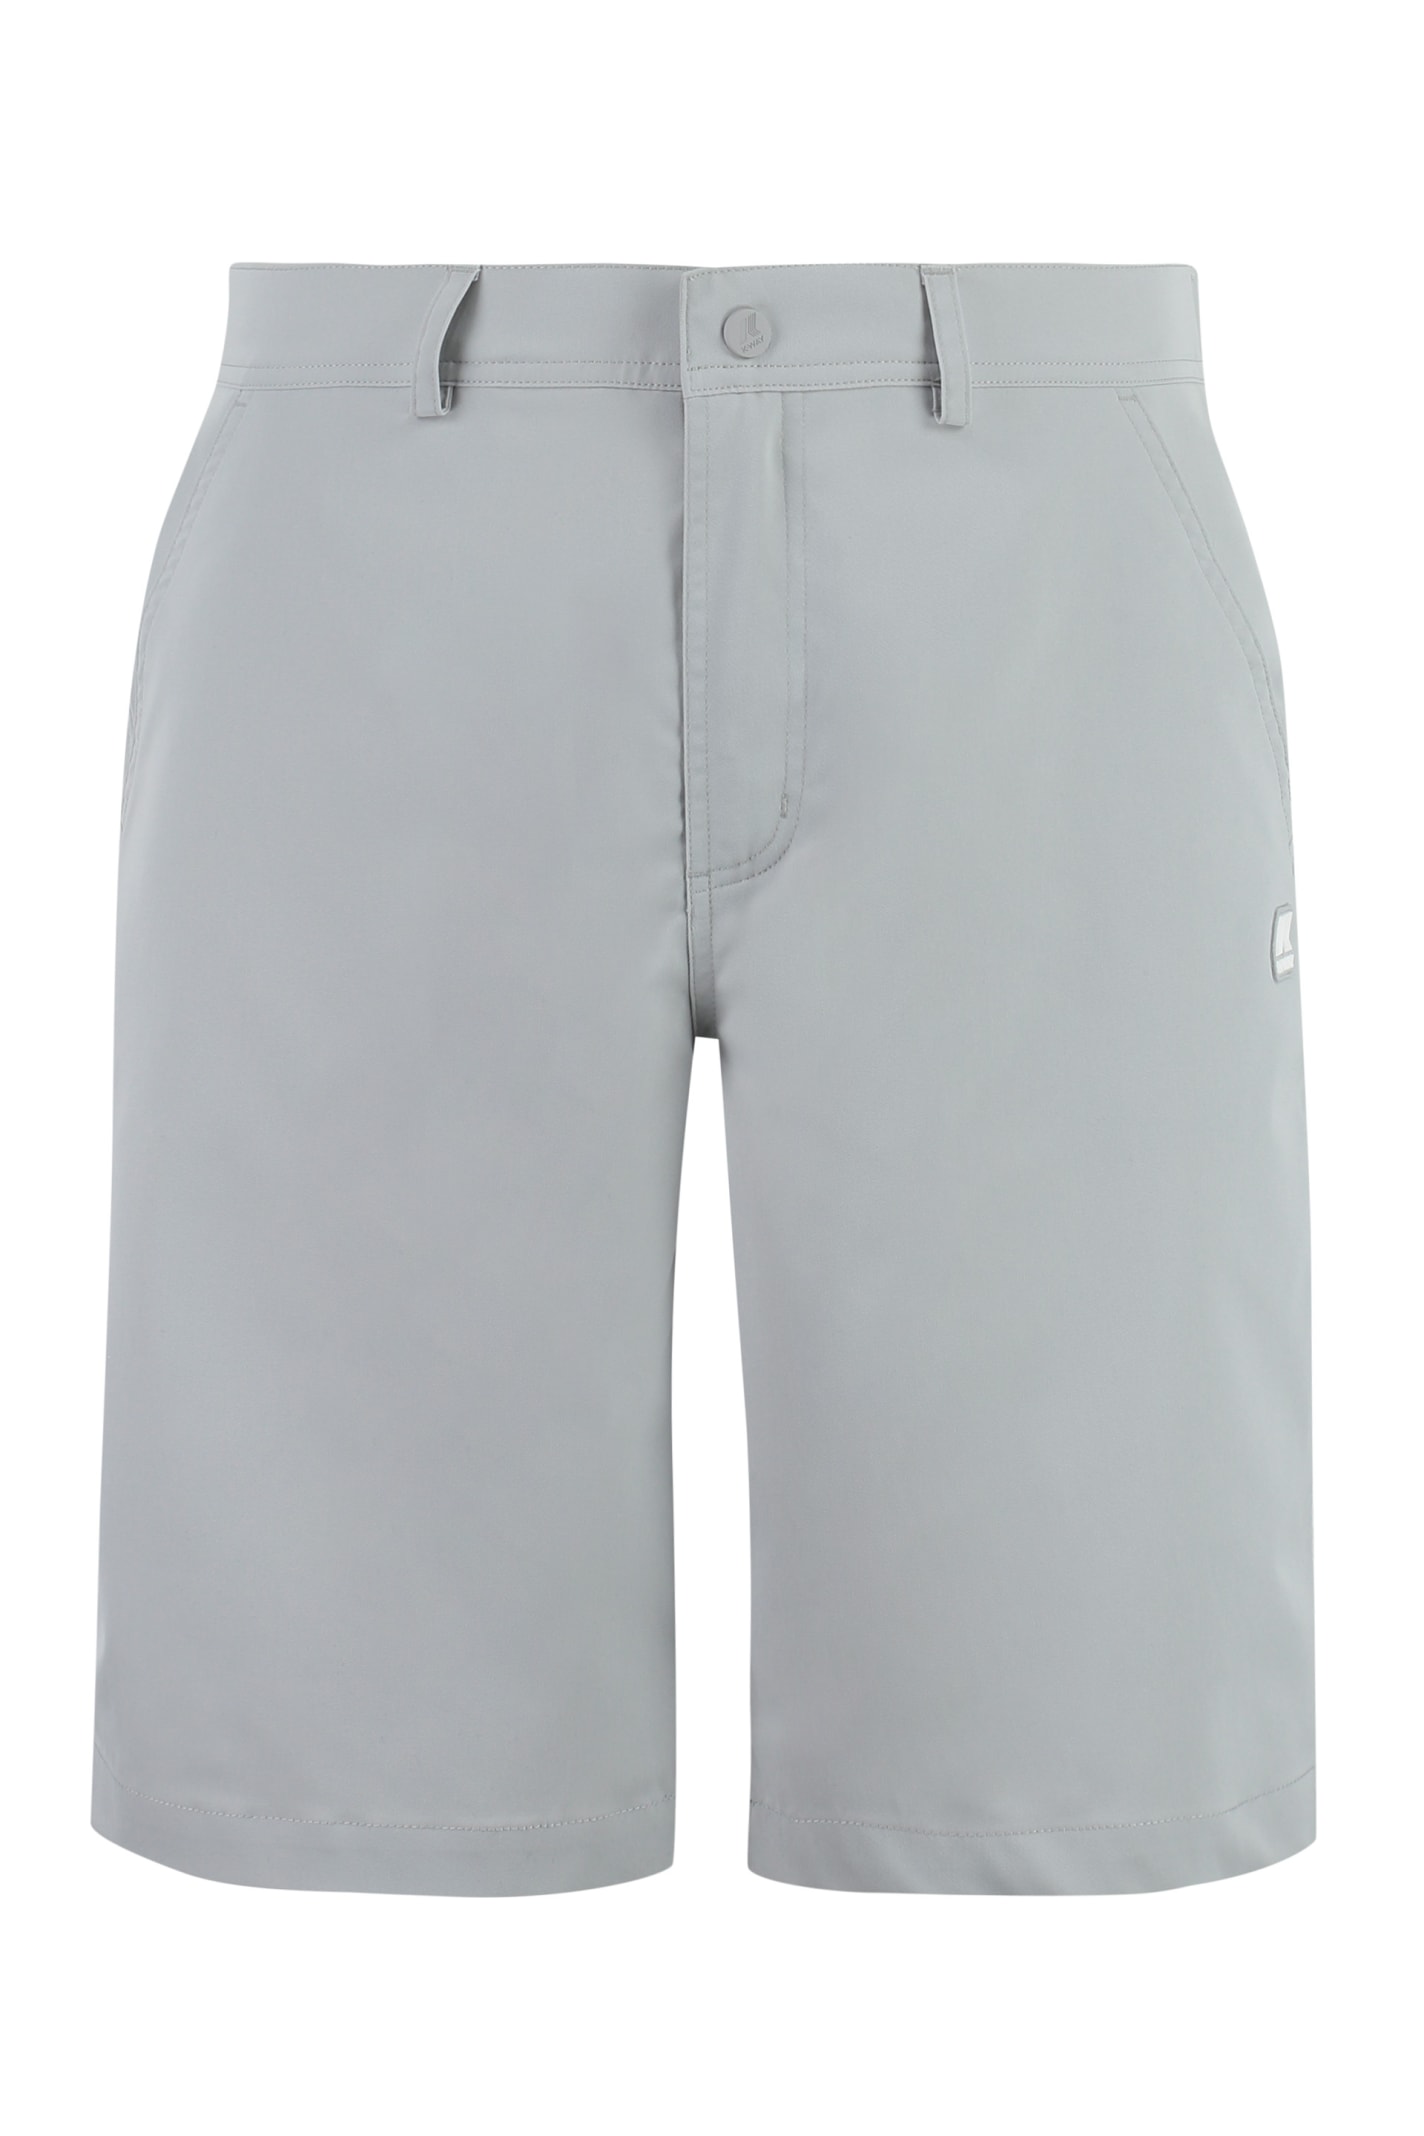 K-way Nylon Shorts In Grey